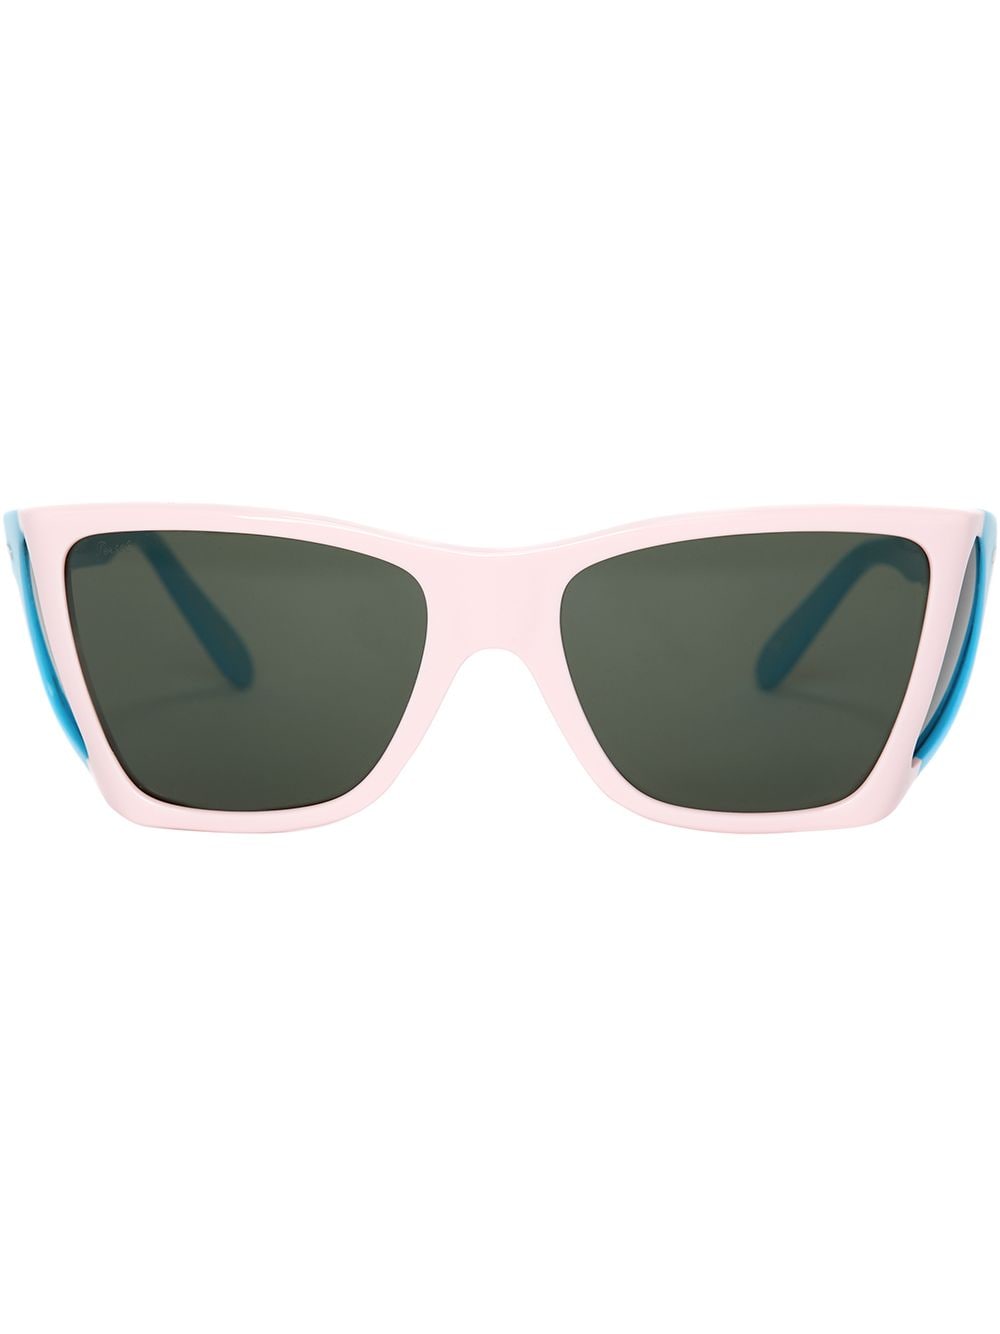 JW Anderson x Persol wide-frame sunglasses - Grey von JW Anderson